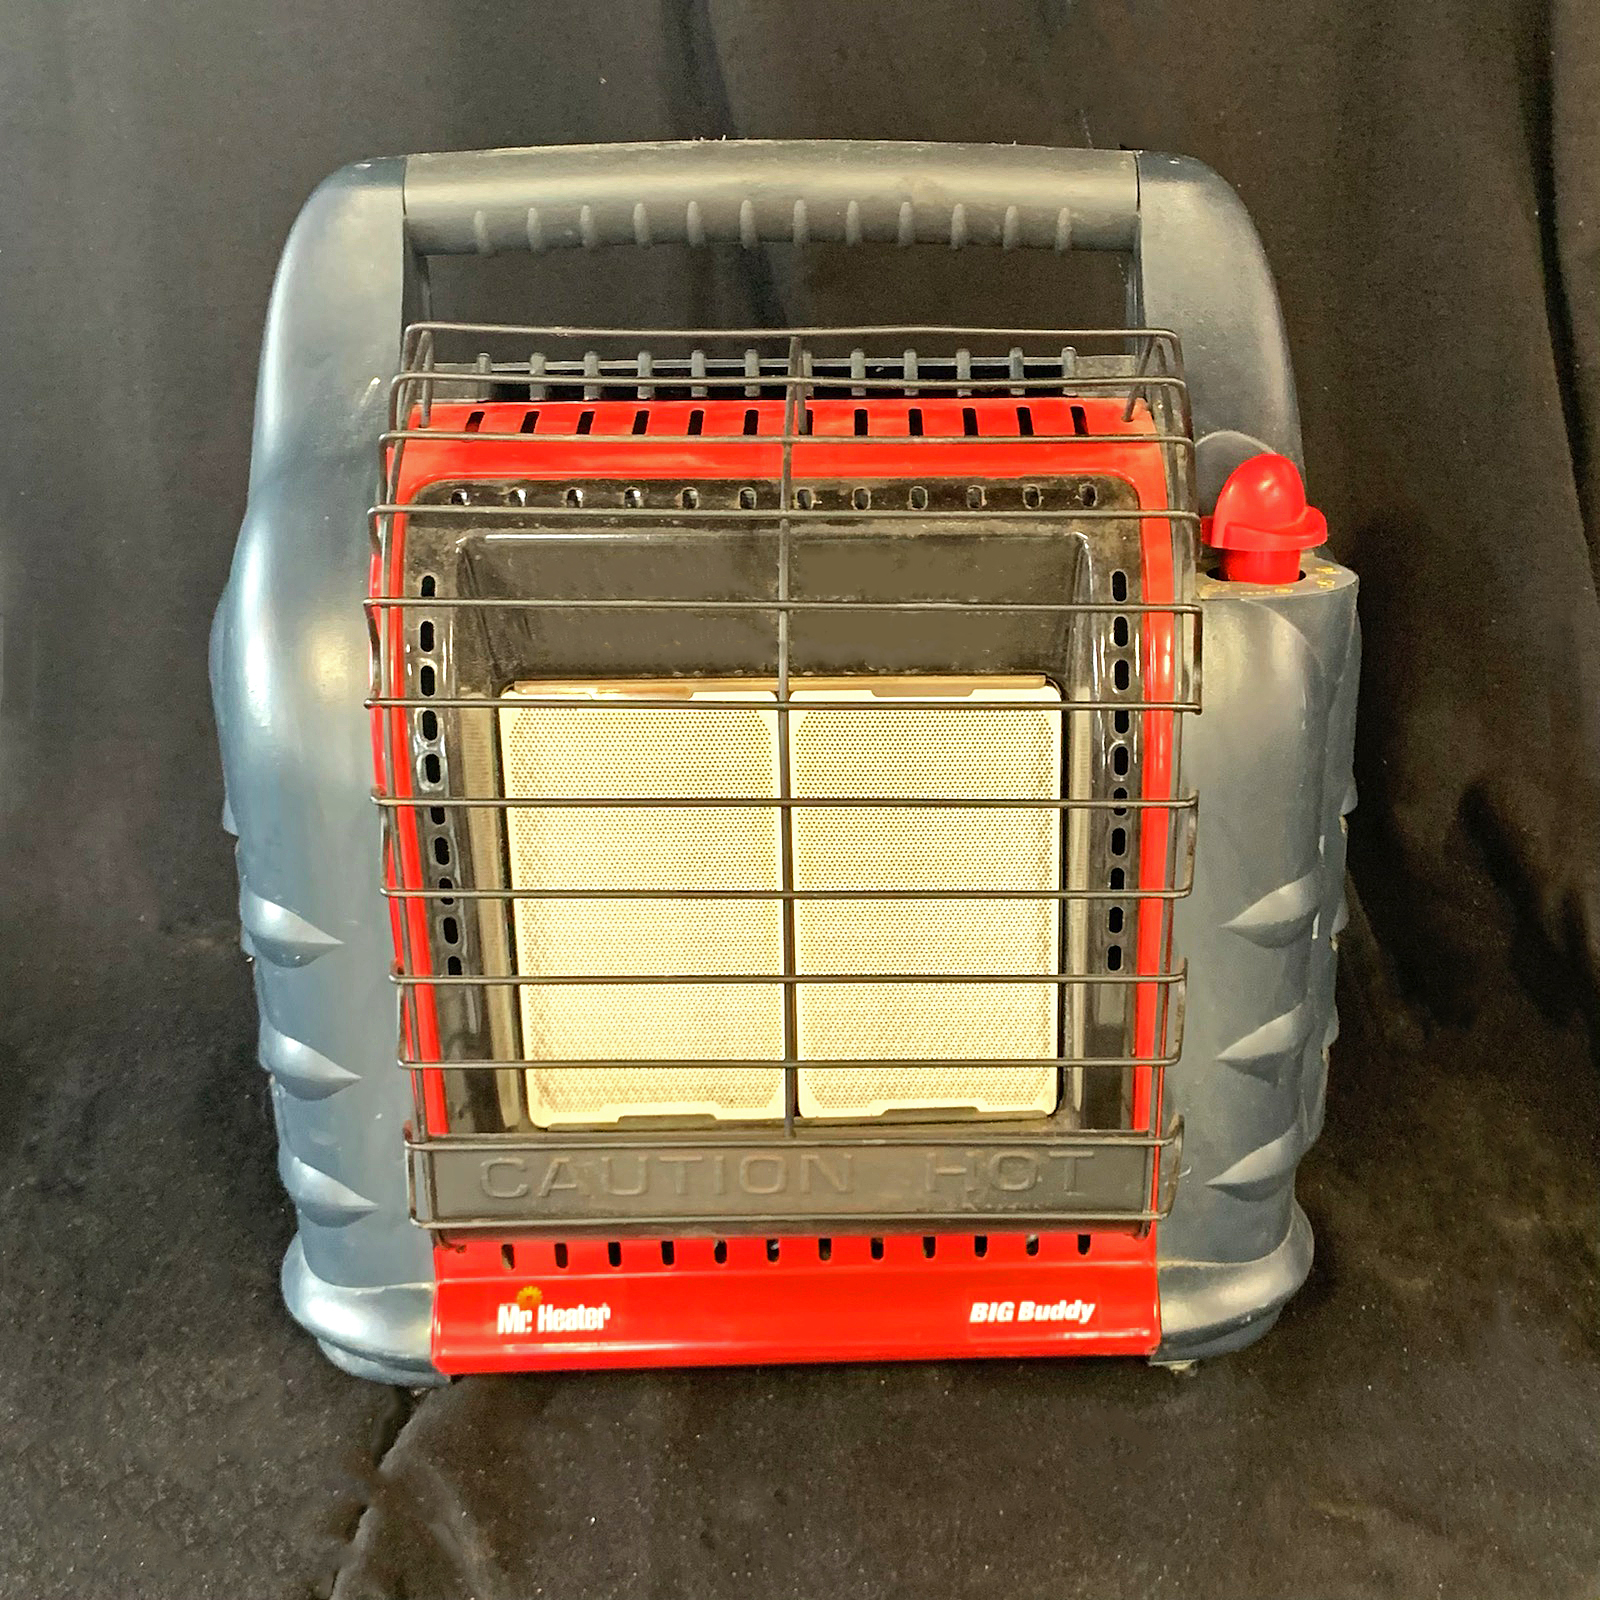 Personal Portable Propane Floor Heater